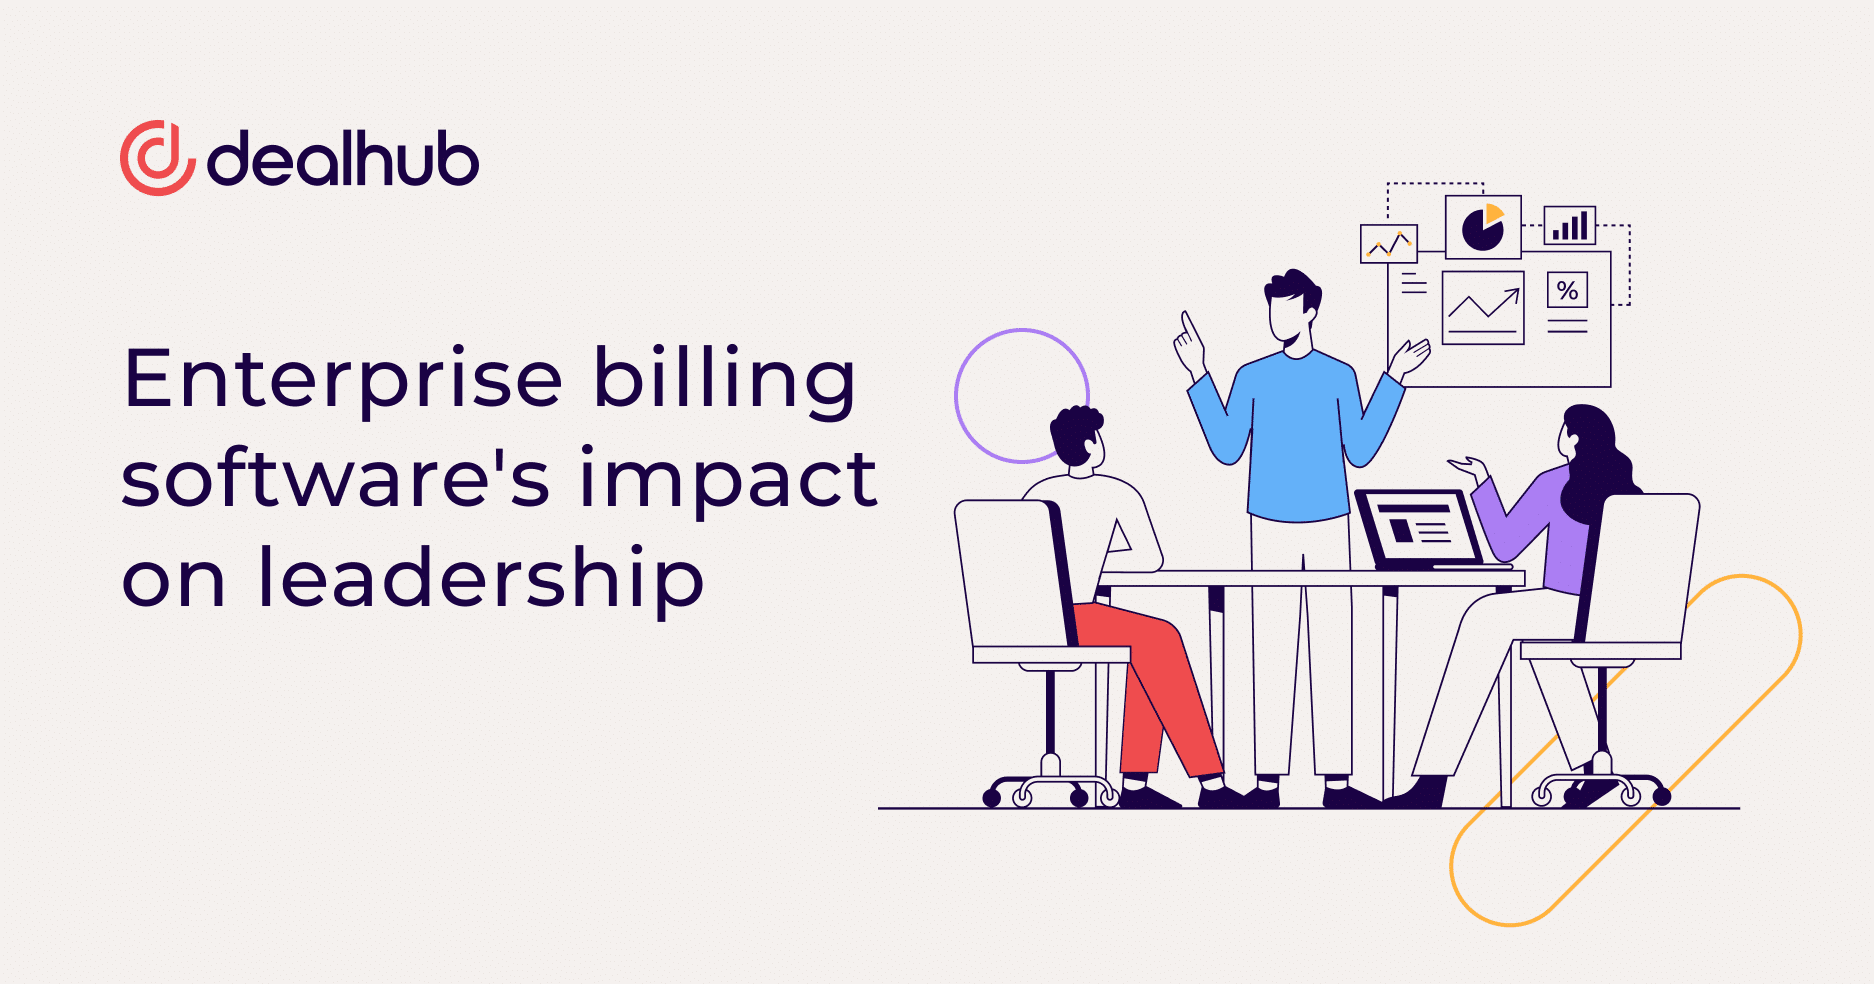 Enterprise billing software's impact on leadership